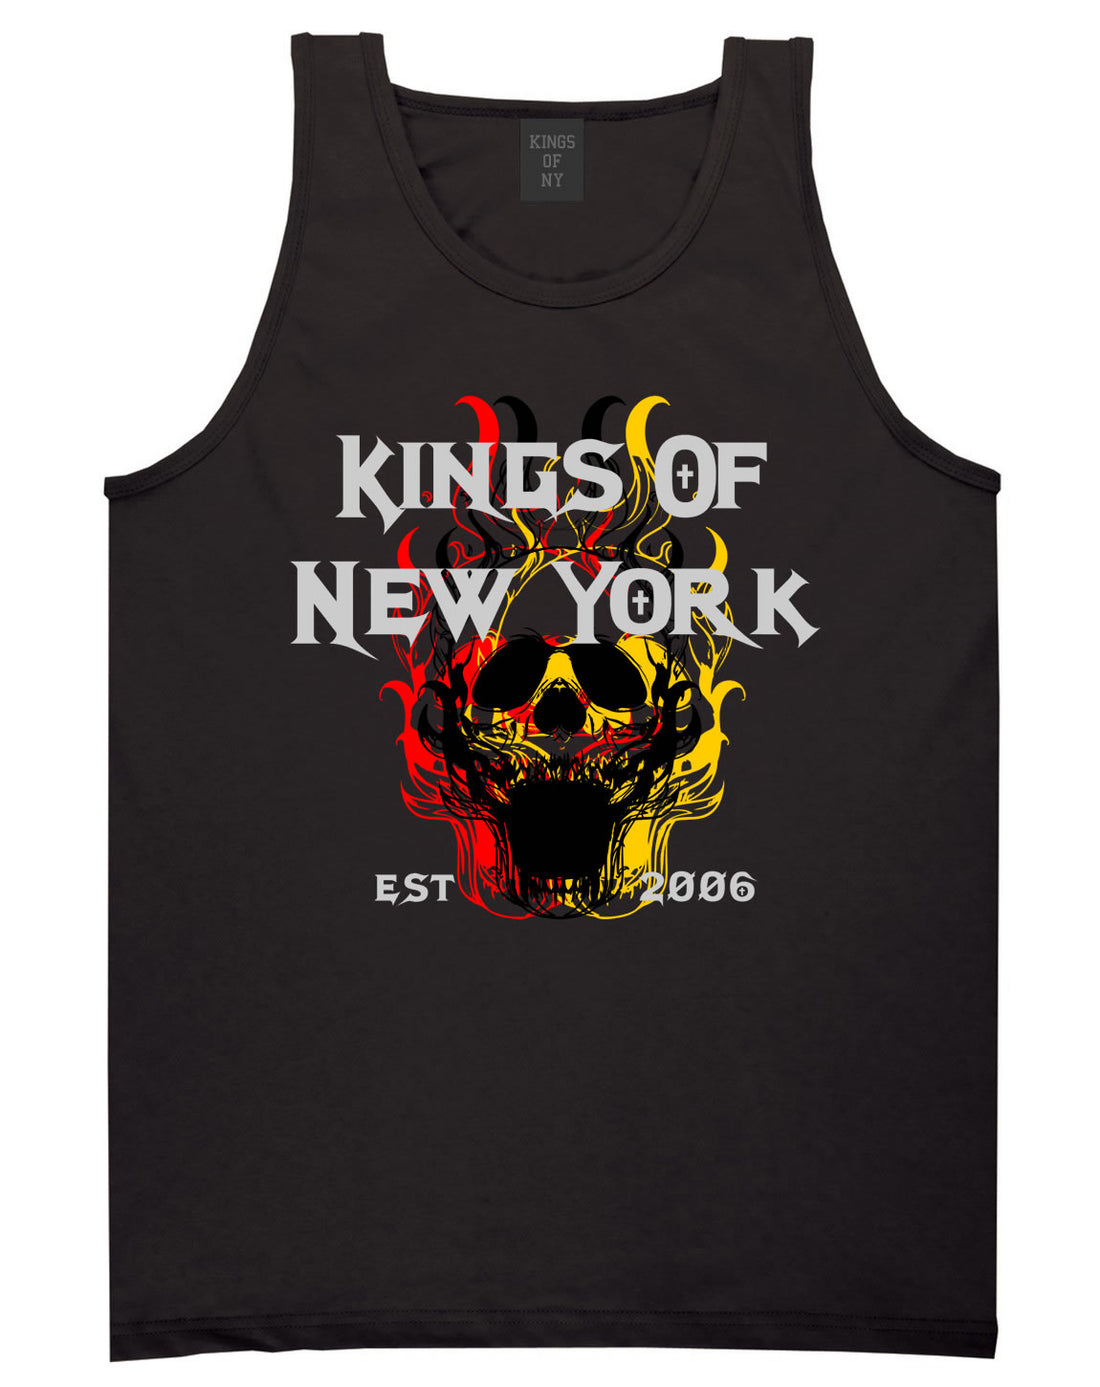 Kings Of New York Burning Skulls Mens Tank Top Shirt Black By Kings Of NY